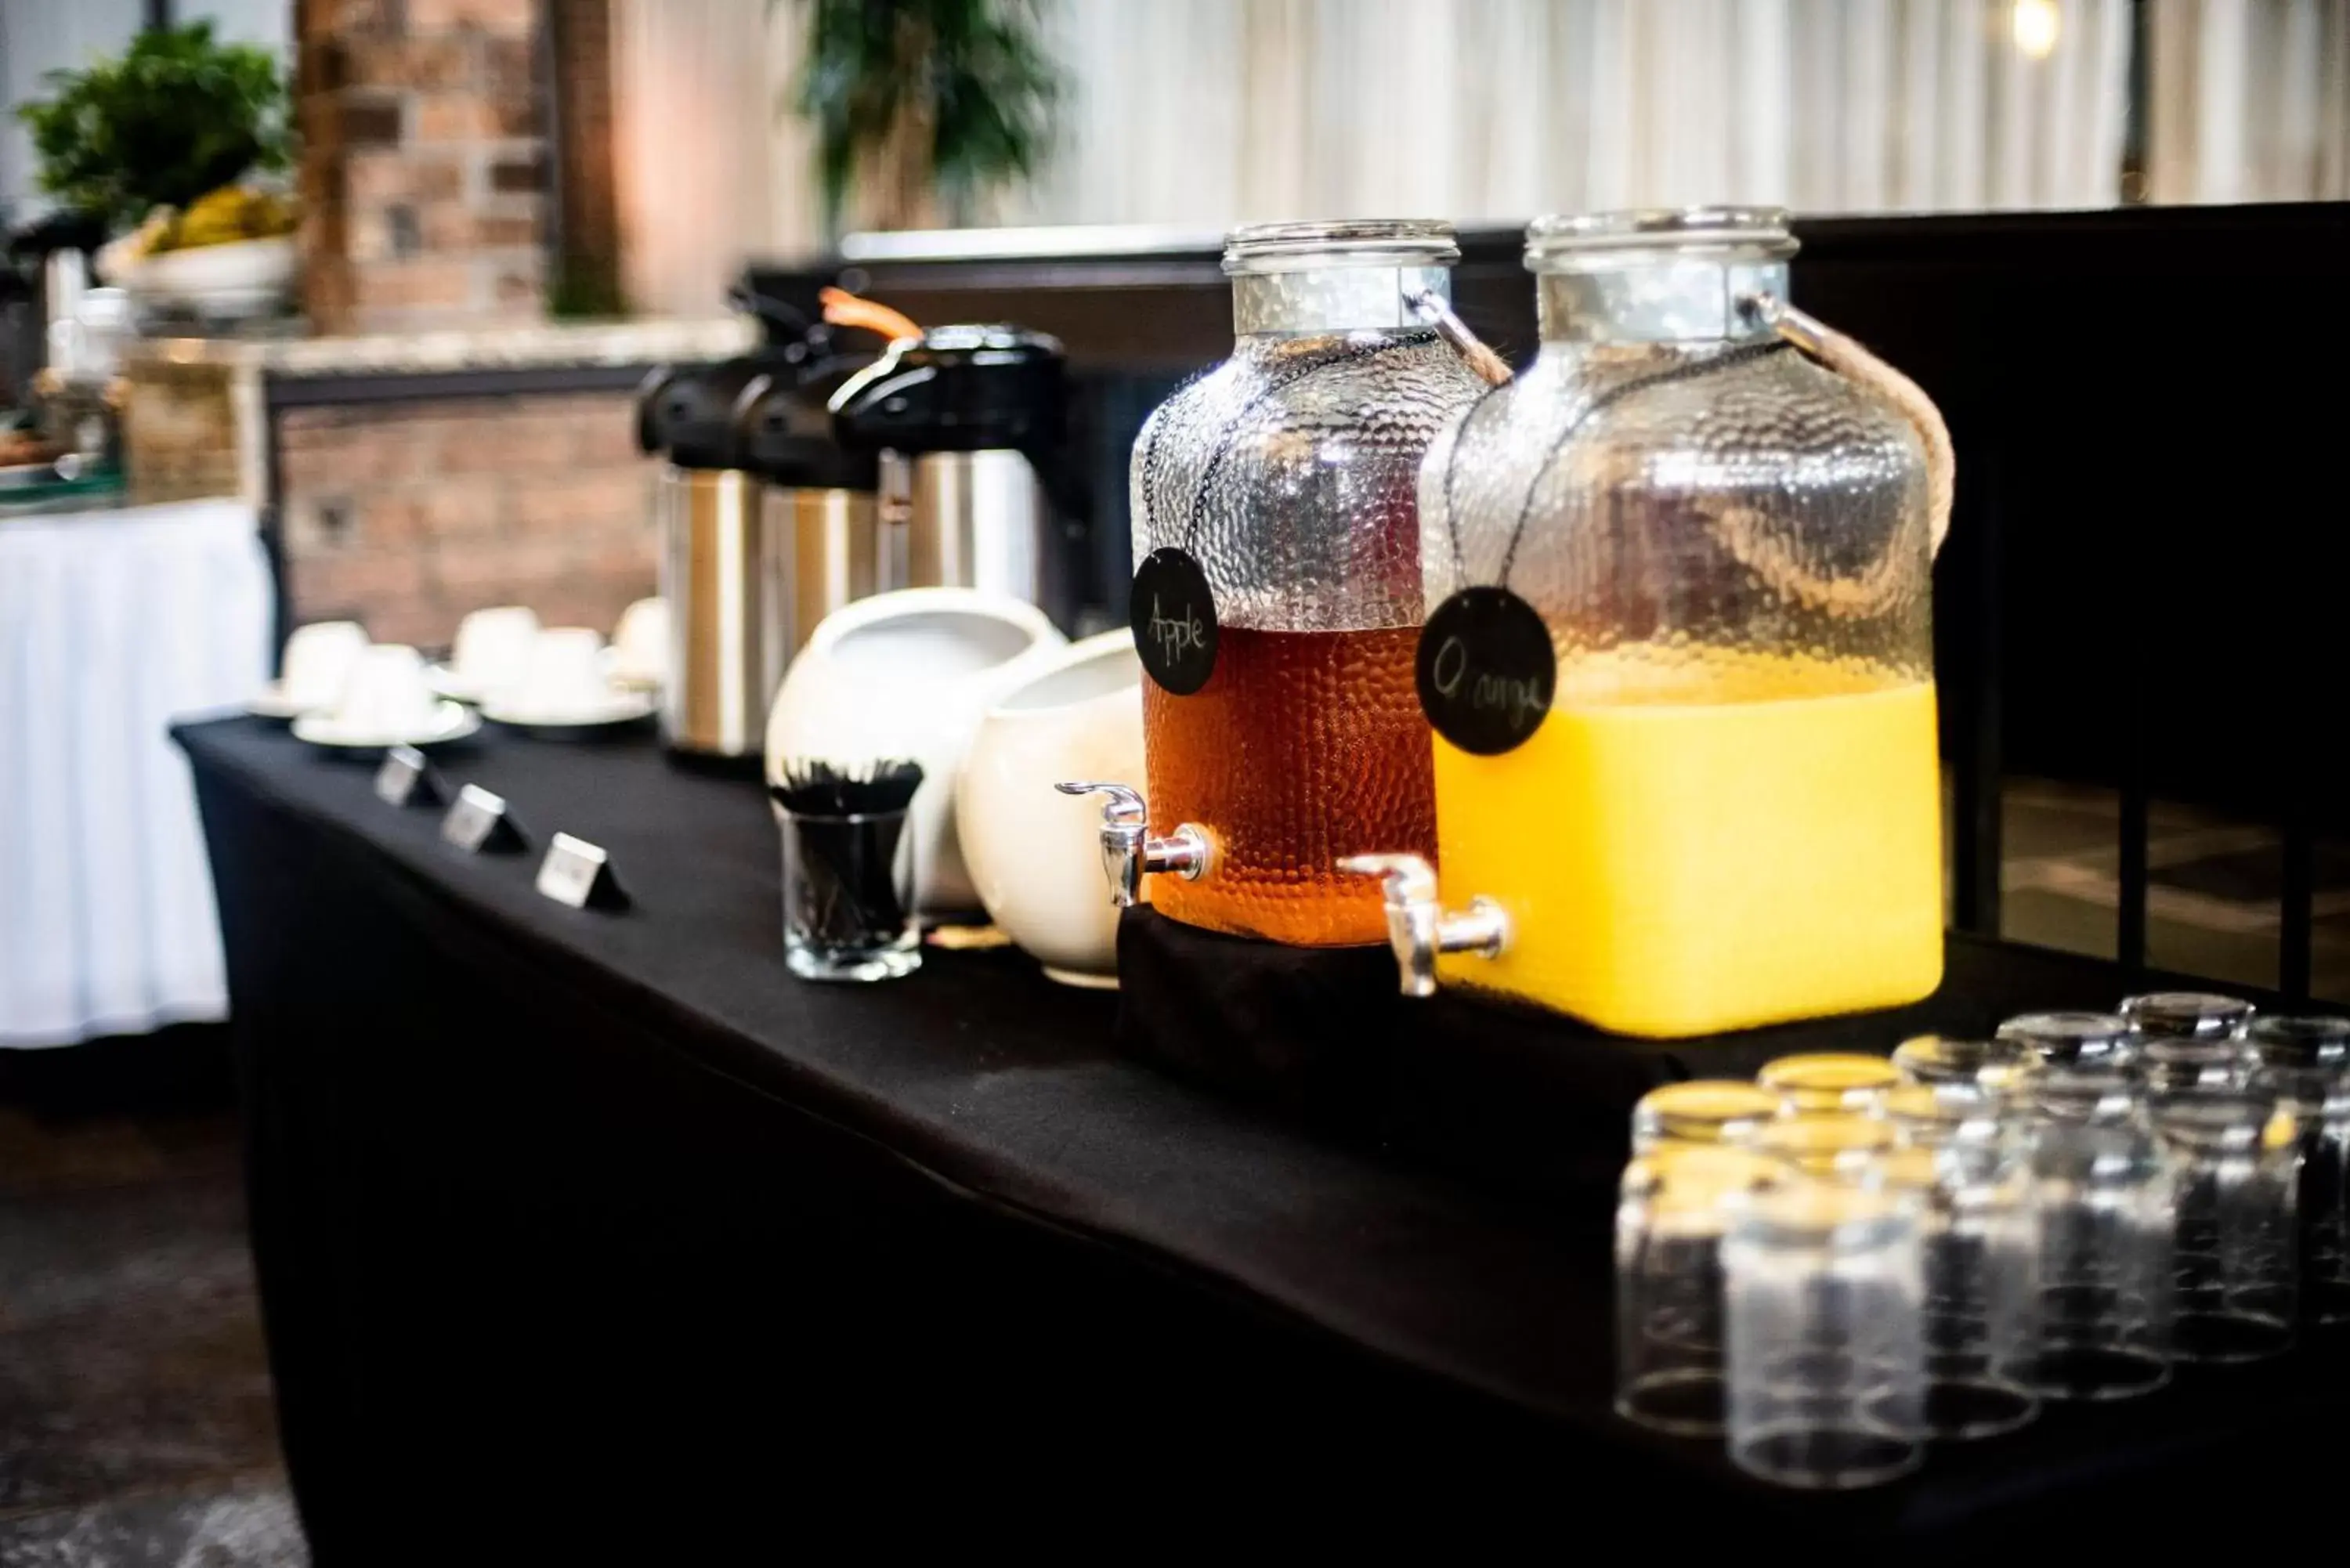 Coffee/tea facilities, Drinks in Altoona Grand Hotel